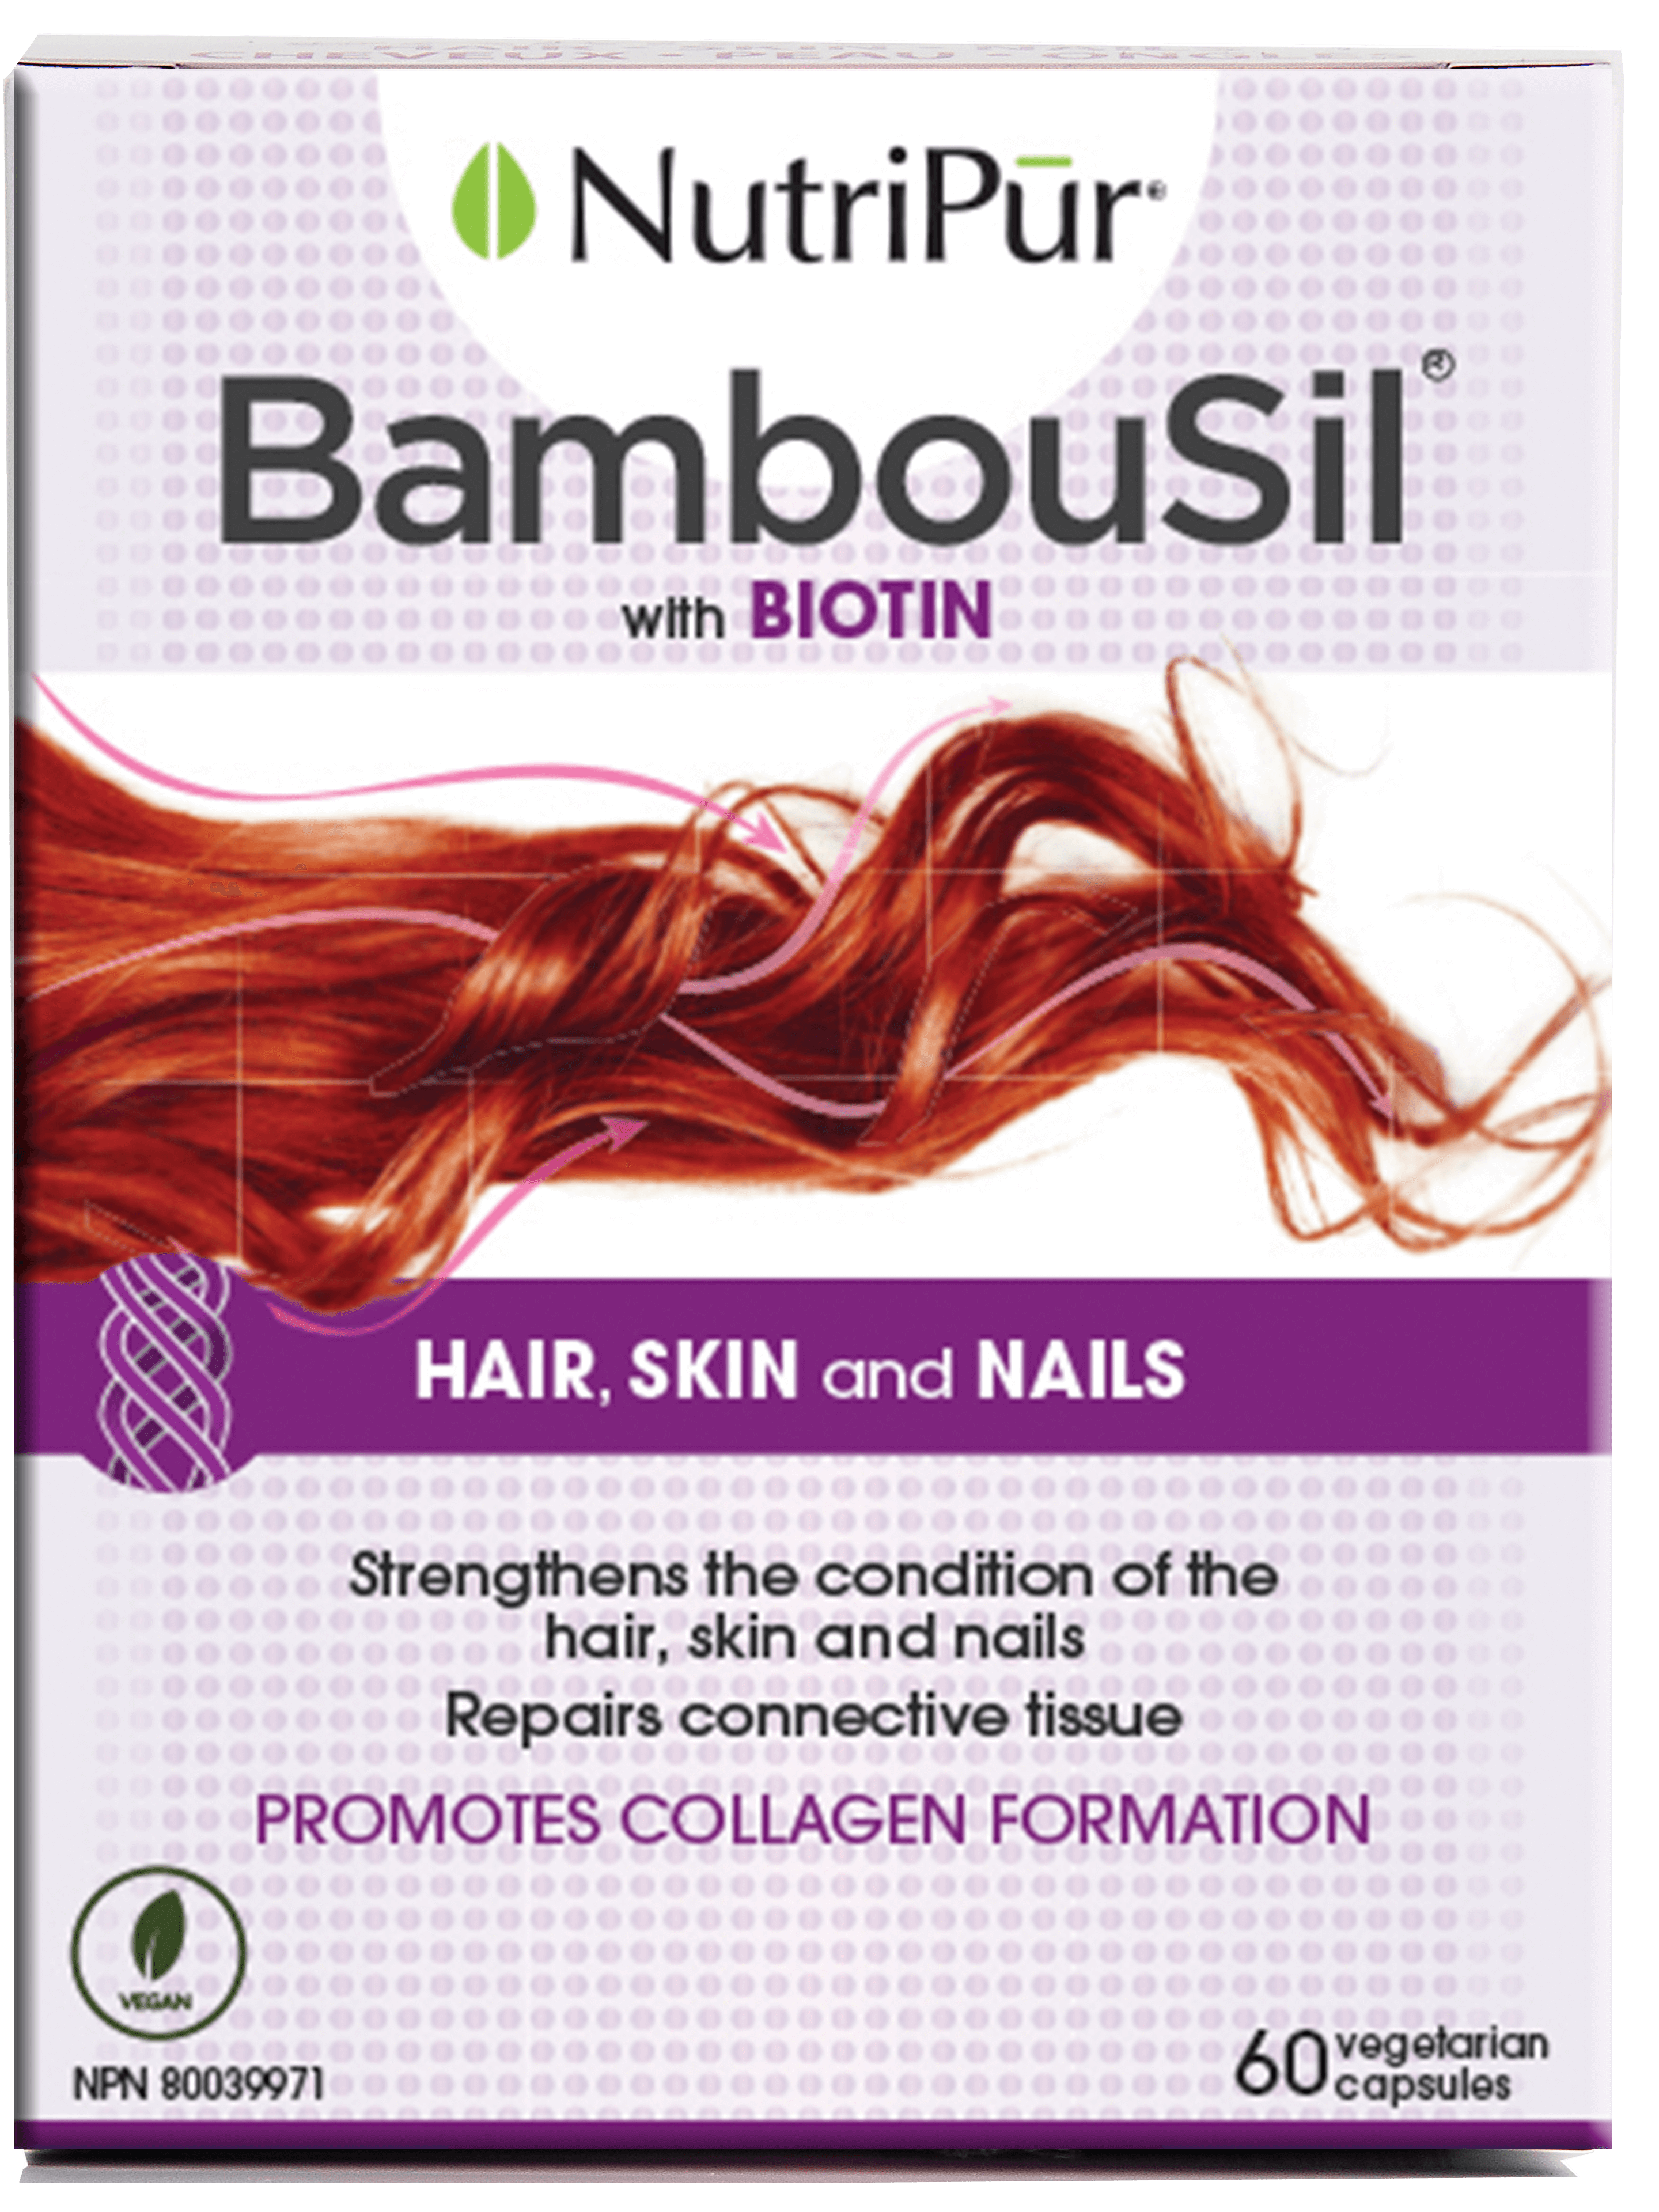 Nutripur - Bambousil - Hair, Skin, Nails, Beauty, Connective Tissue, Biotin - Ebambu.ca natural health product store - free shipping <59$ 